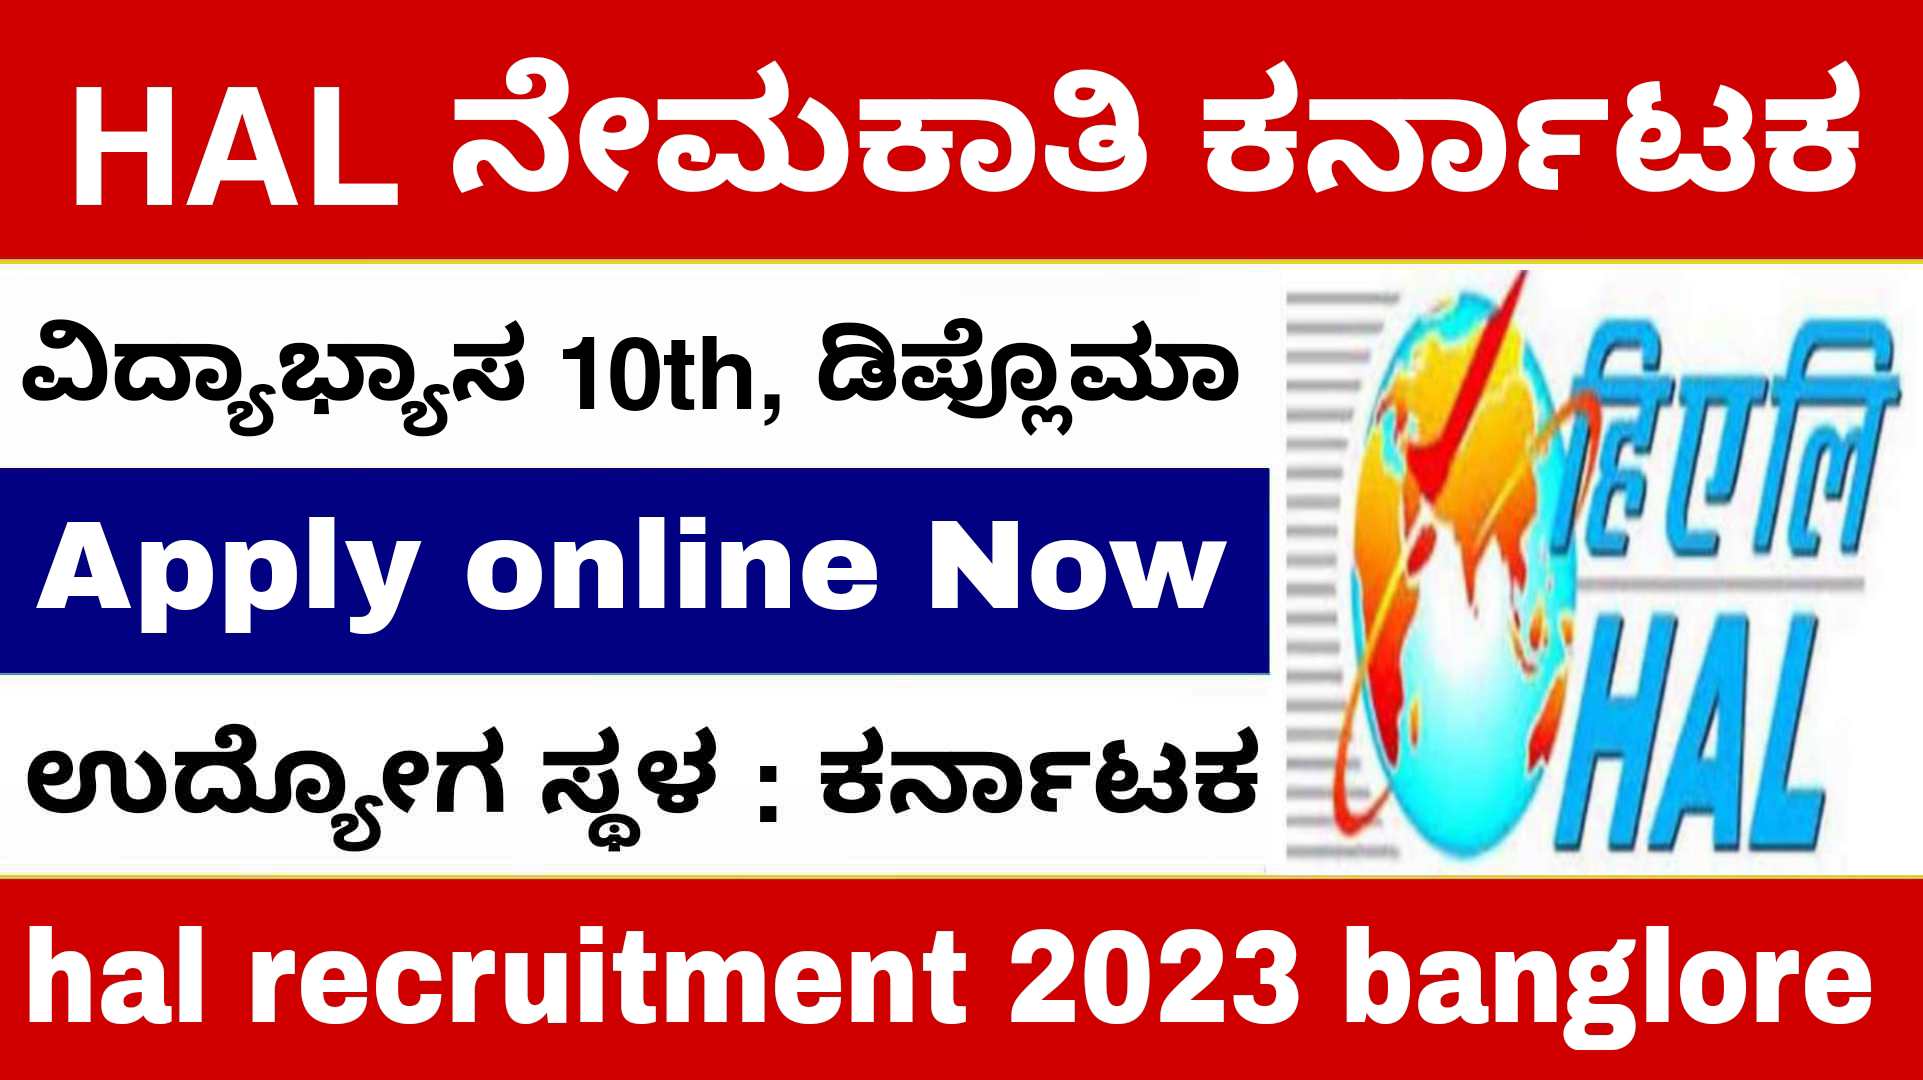 hal recruitment 2023 banglore